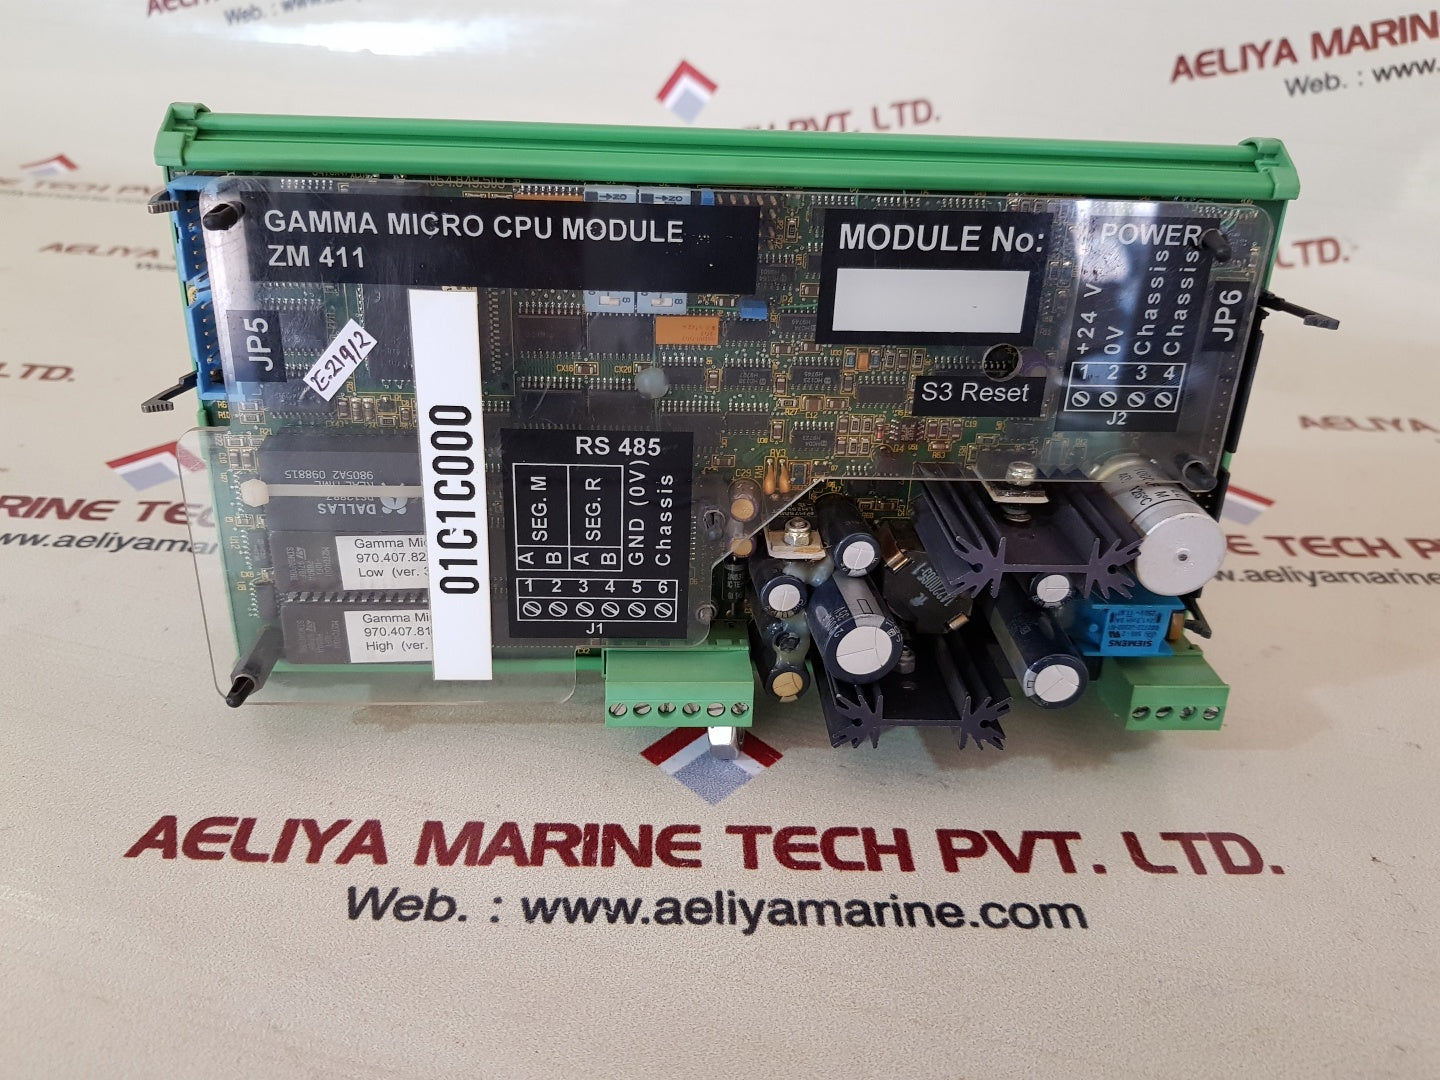 Stn atlas / Lyngso marine  Gamma micro cpu module zm 411